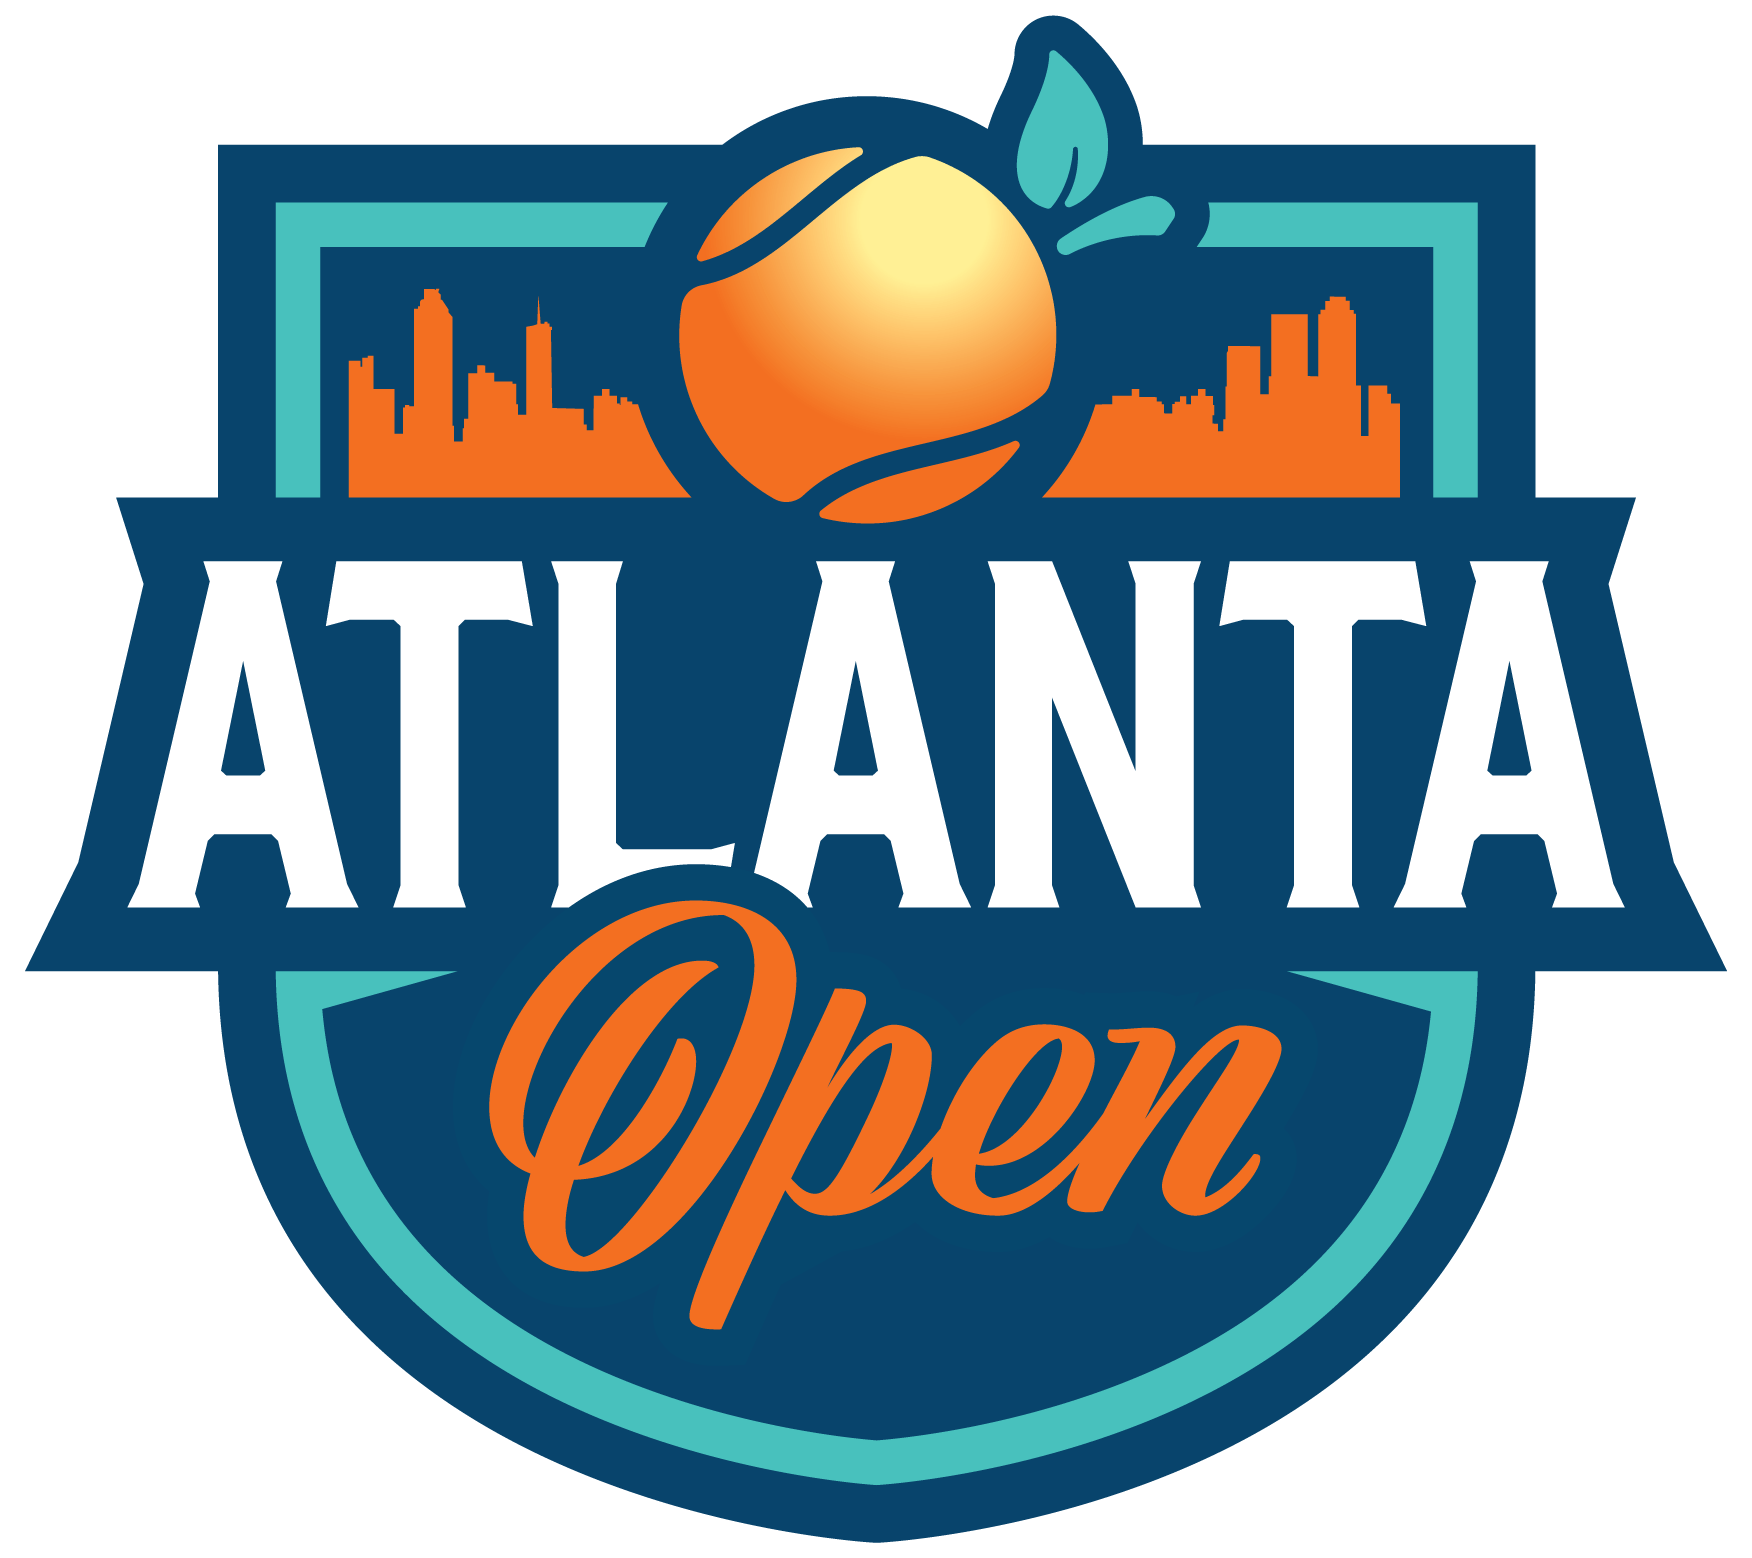 Atlanta Open logo